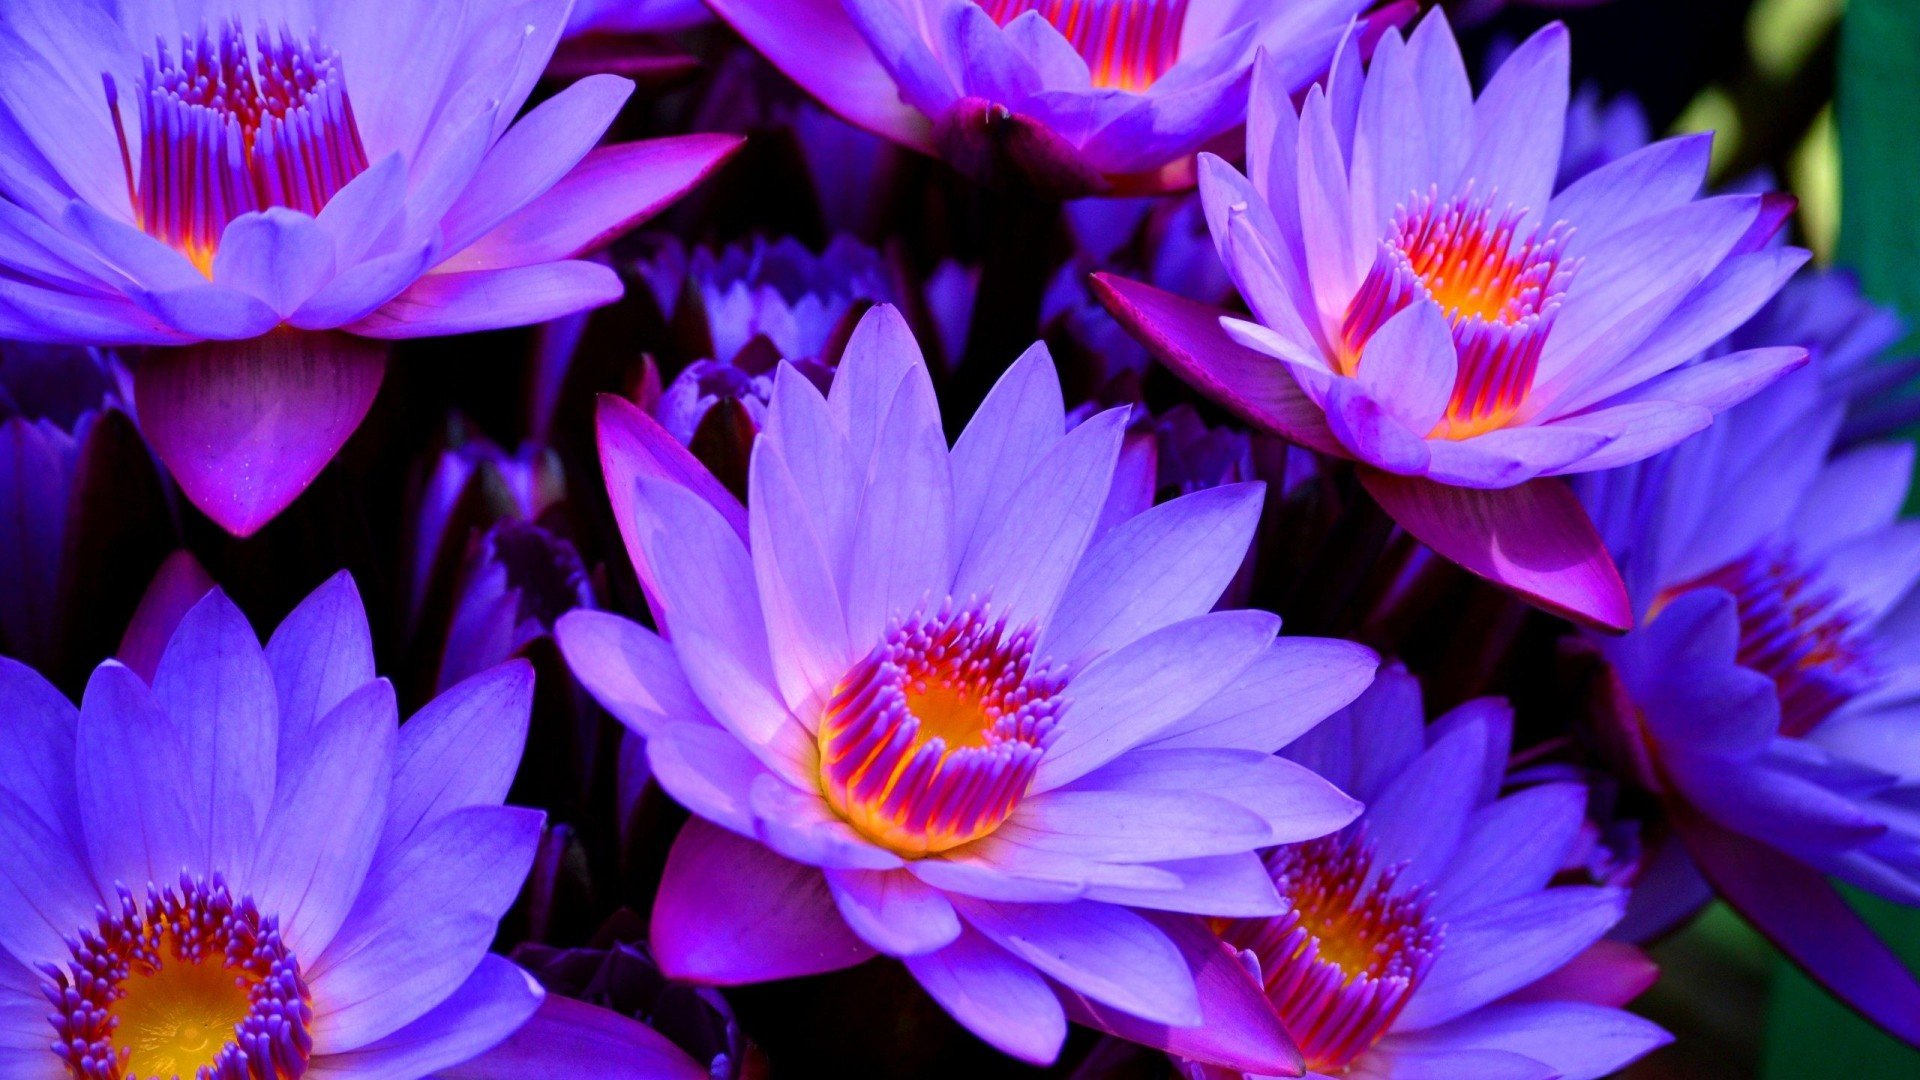 Lotus flower wallpapers 1920x1080 Full HD (1080p) desktop